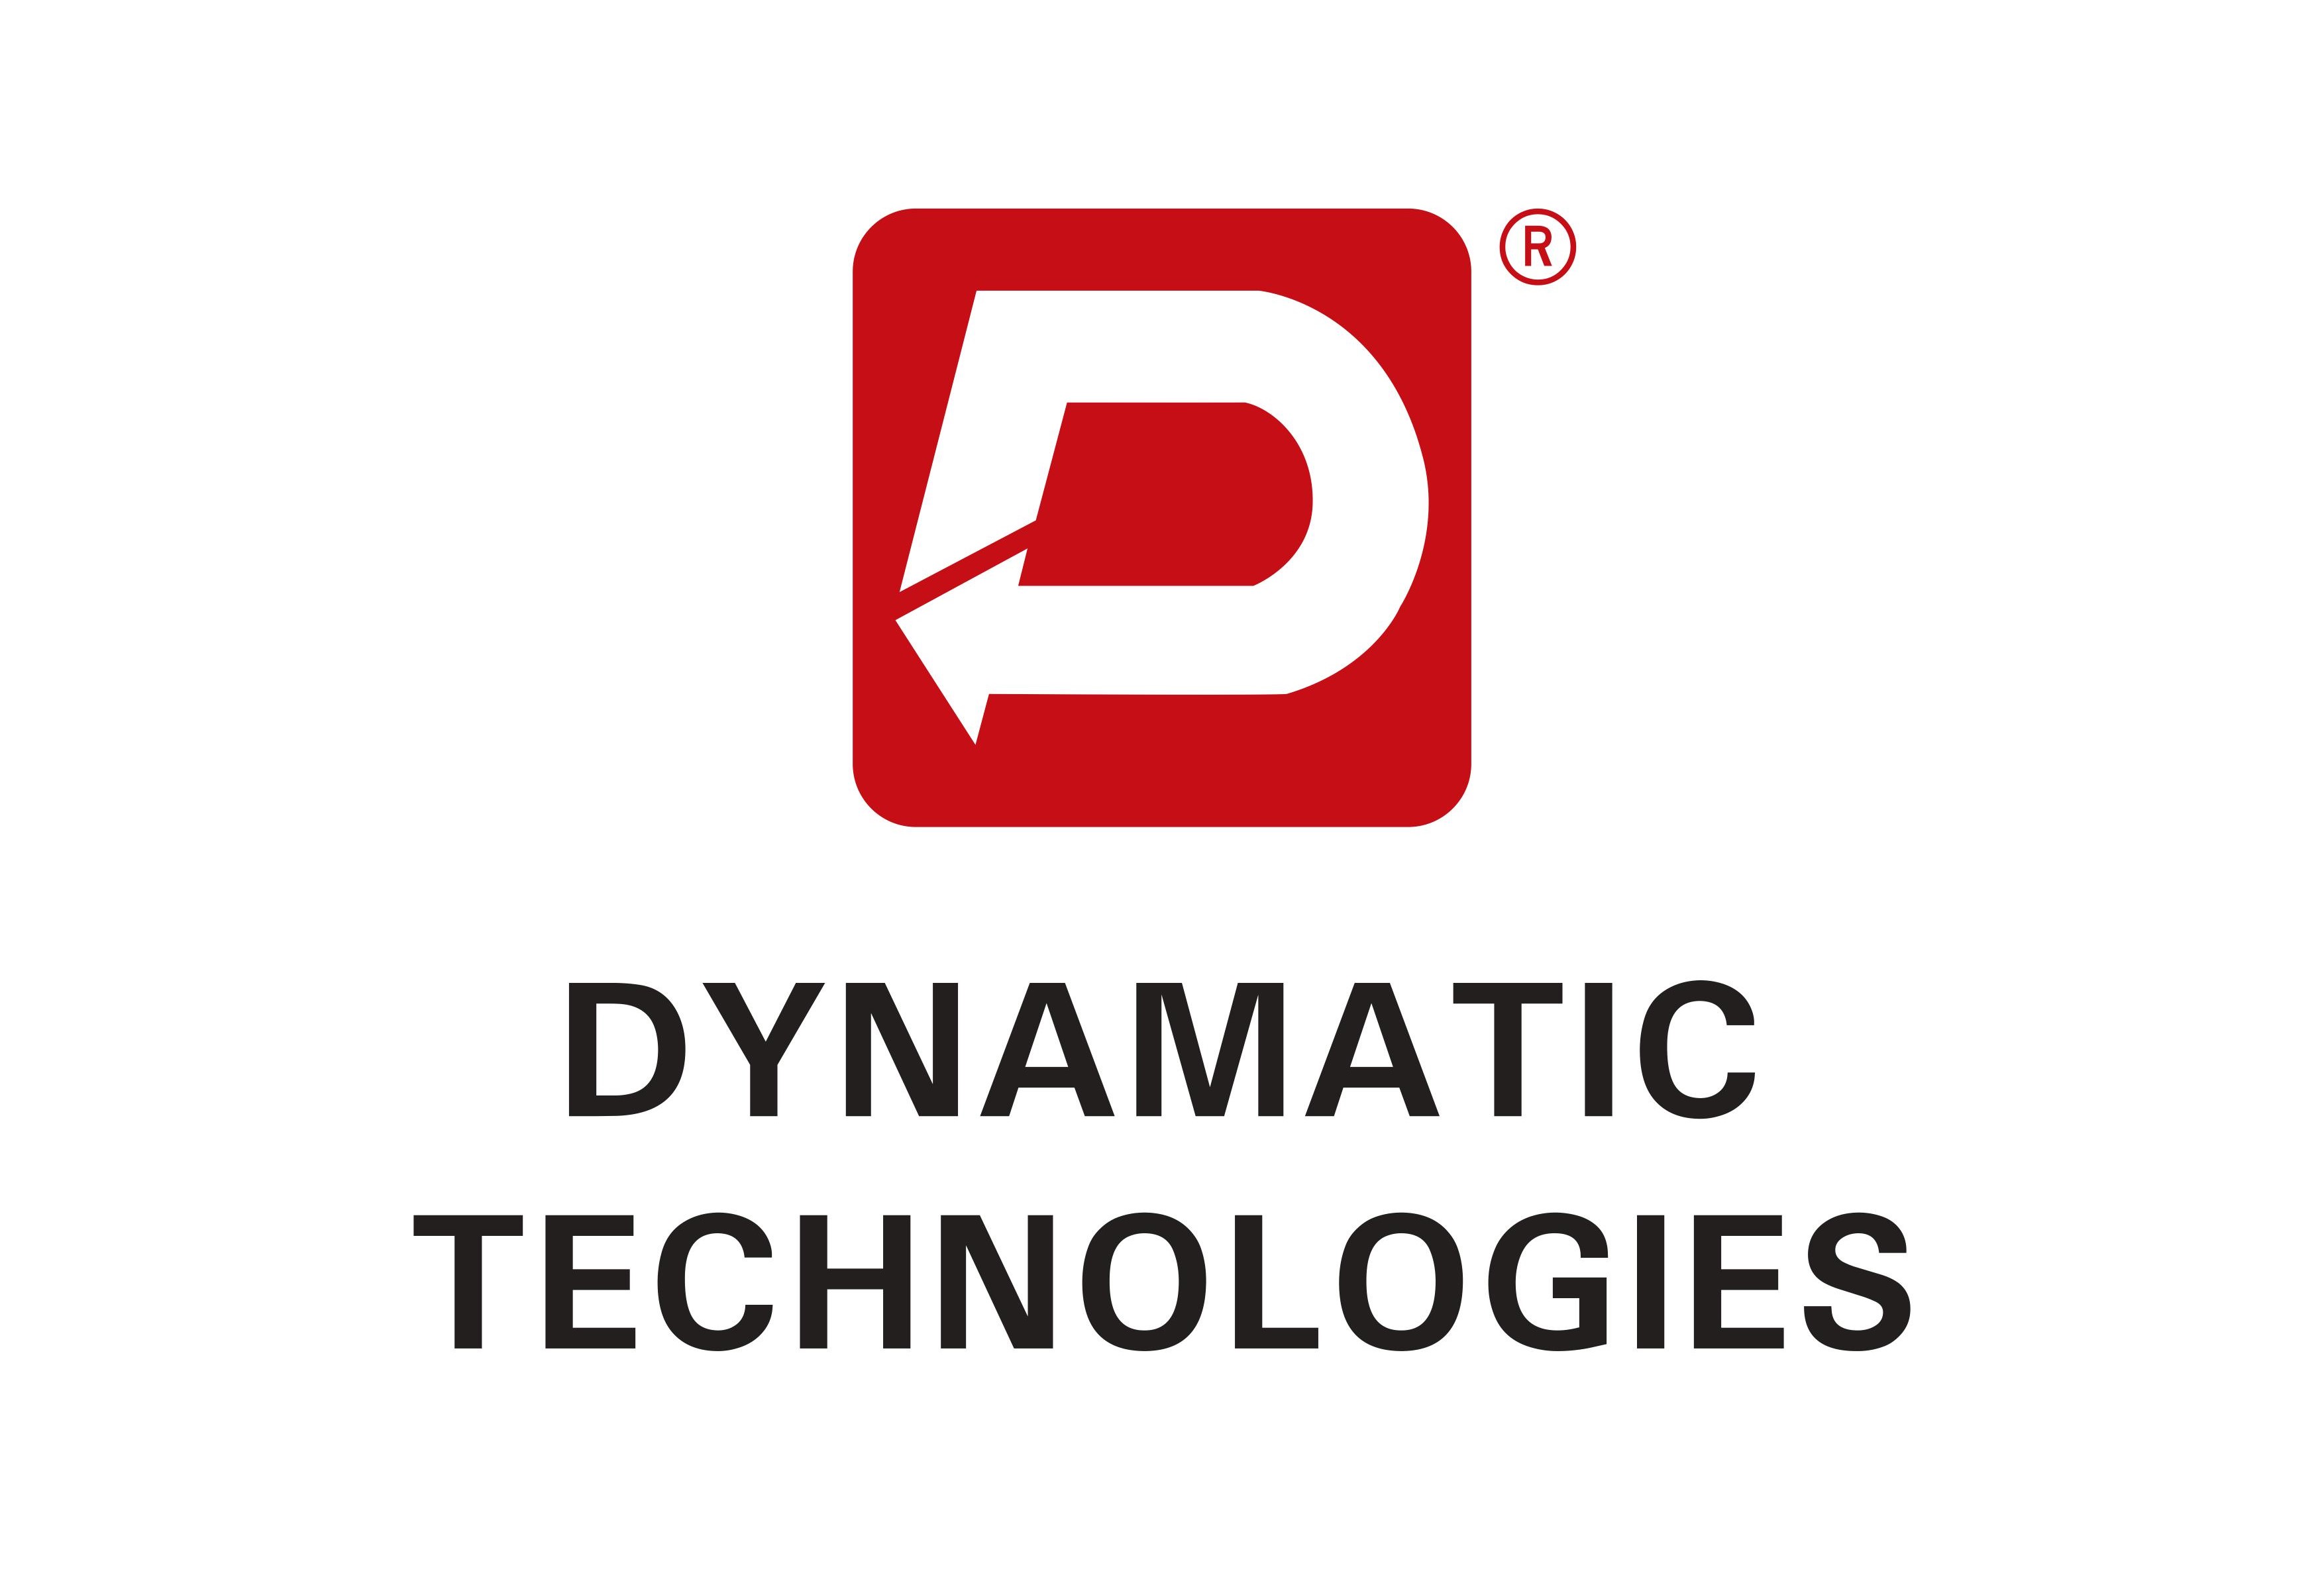 Dynamatic Technologies Limited